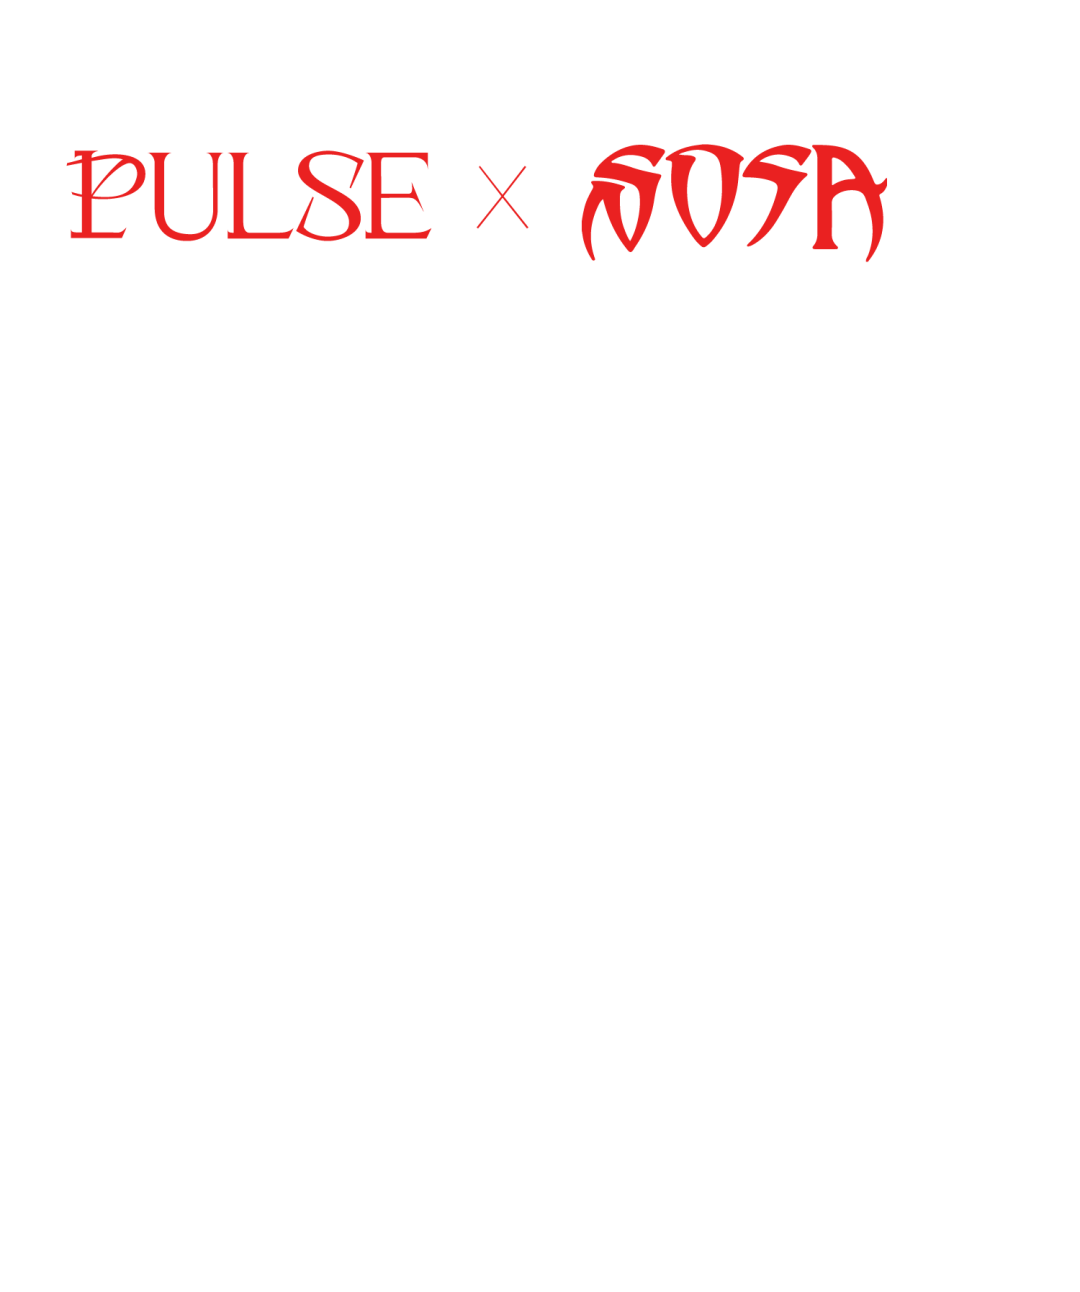 PULSE | 厦门HipHop翻篇了-厦门PULSE酒吧/PULSE CLUB